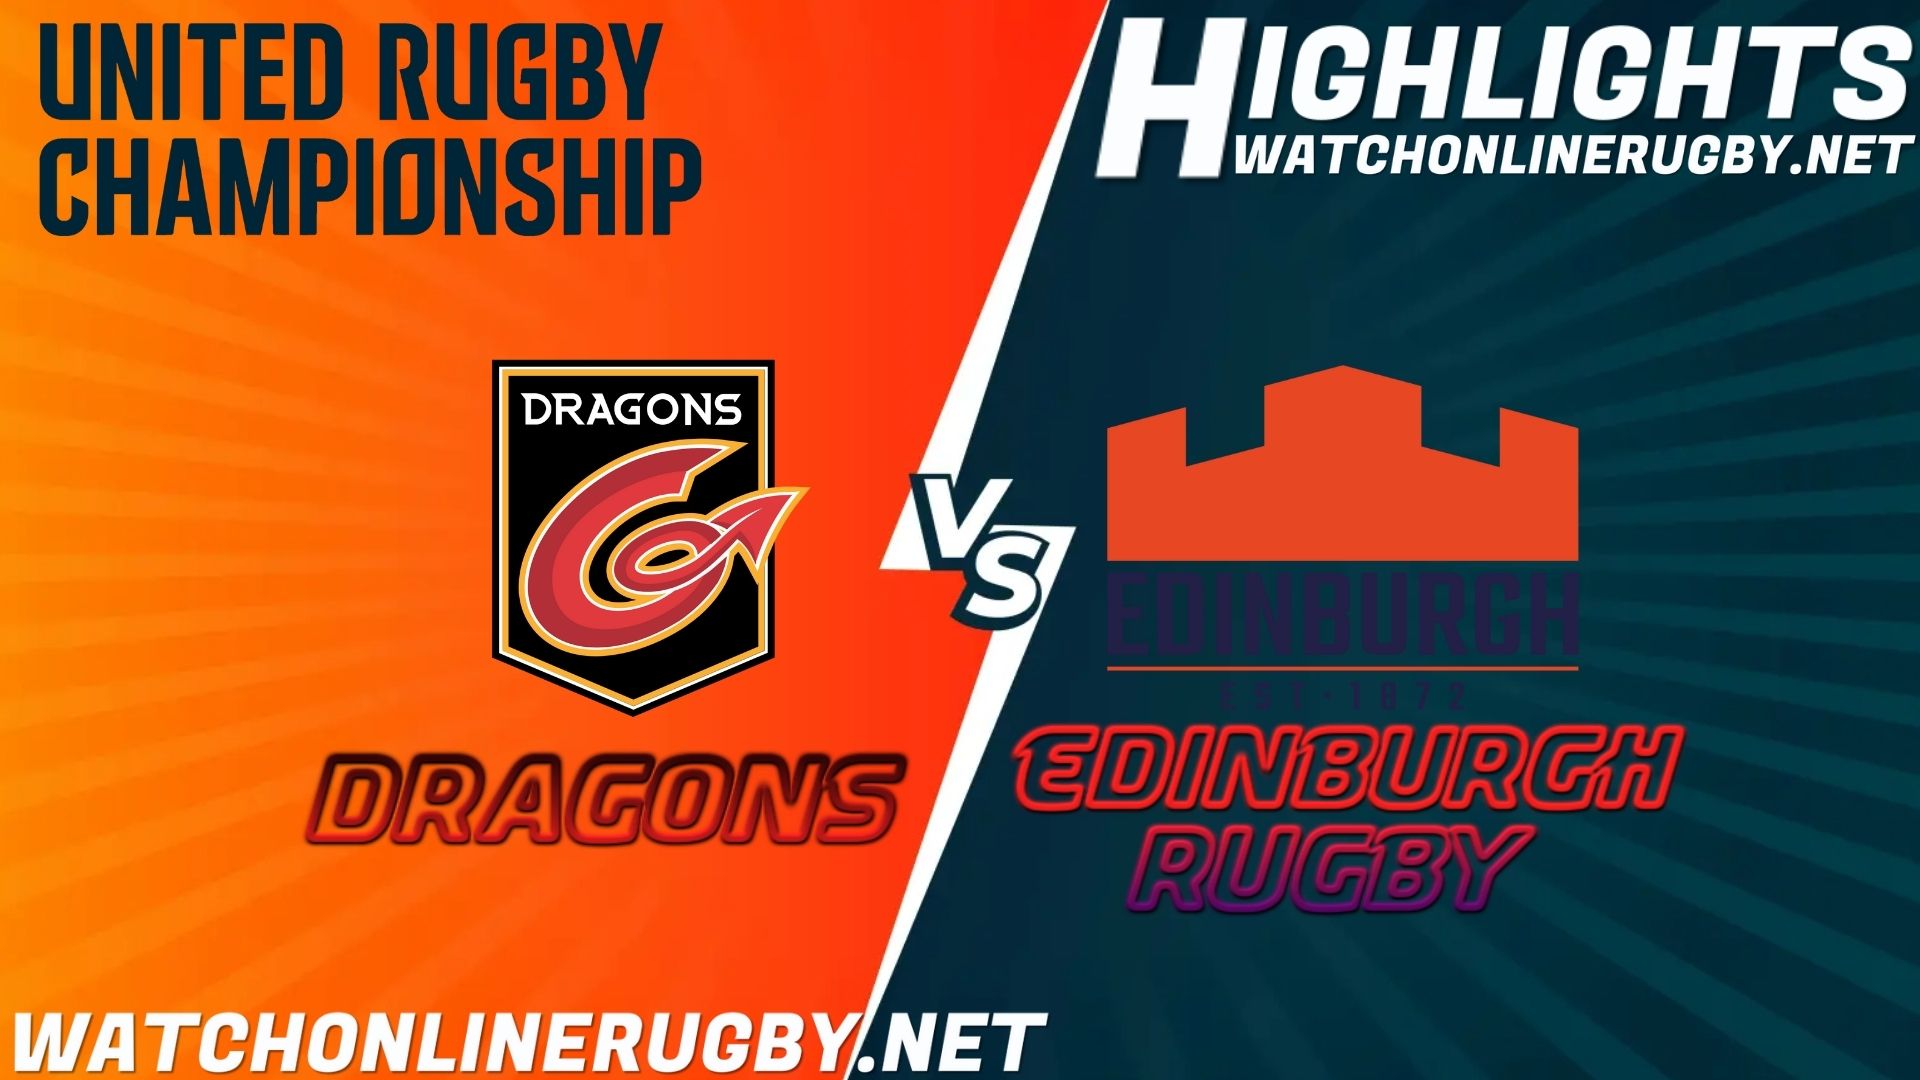 Dragons Vs Edinburgh Rugby United Rugby Championship 2021 RD 6